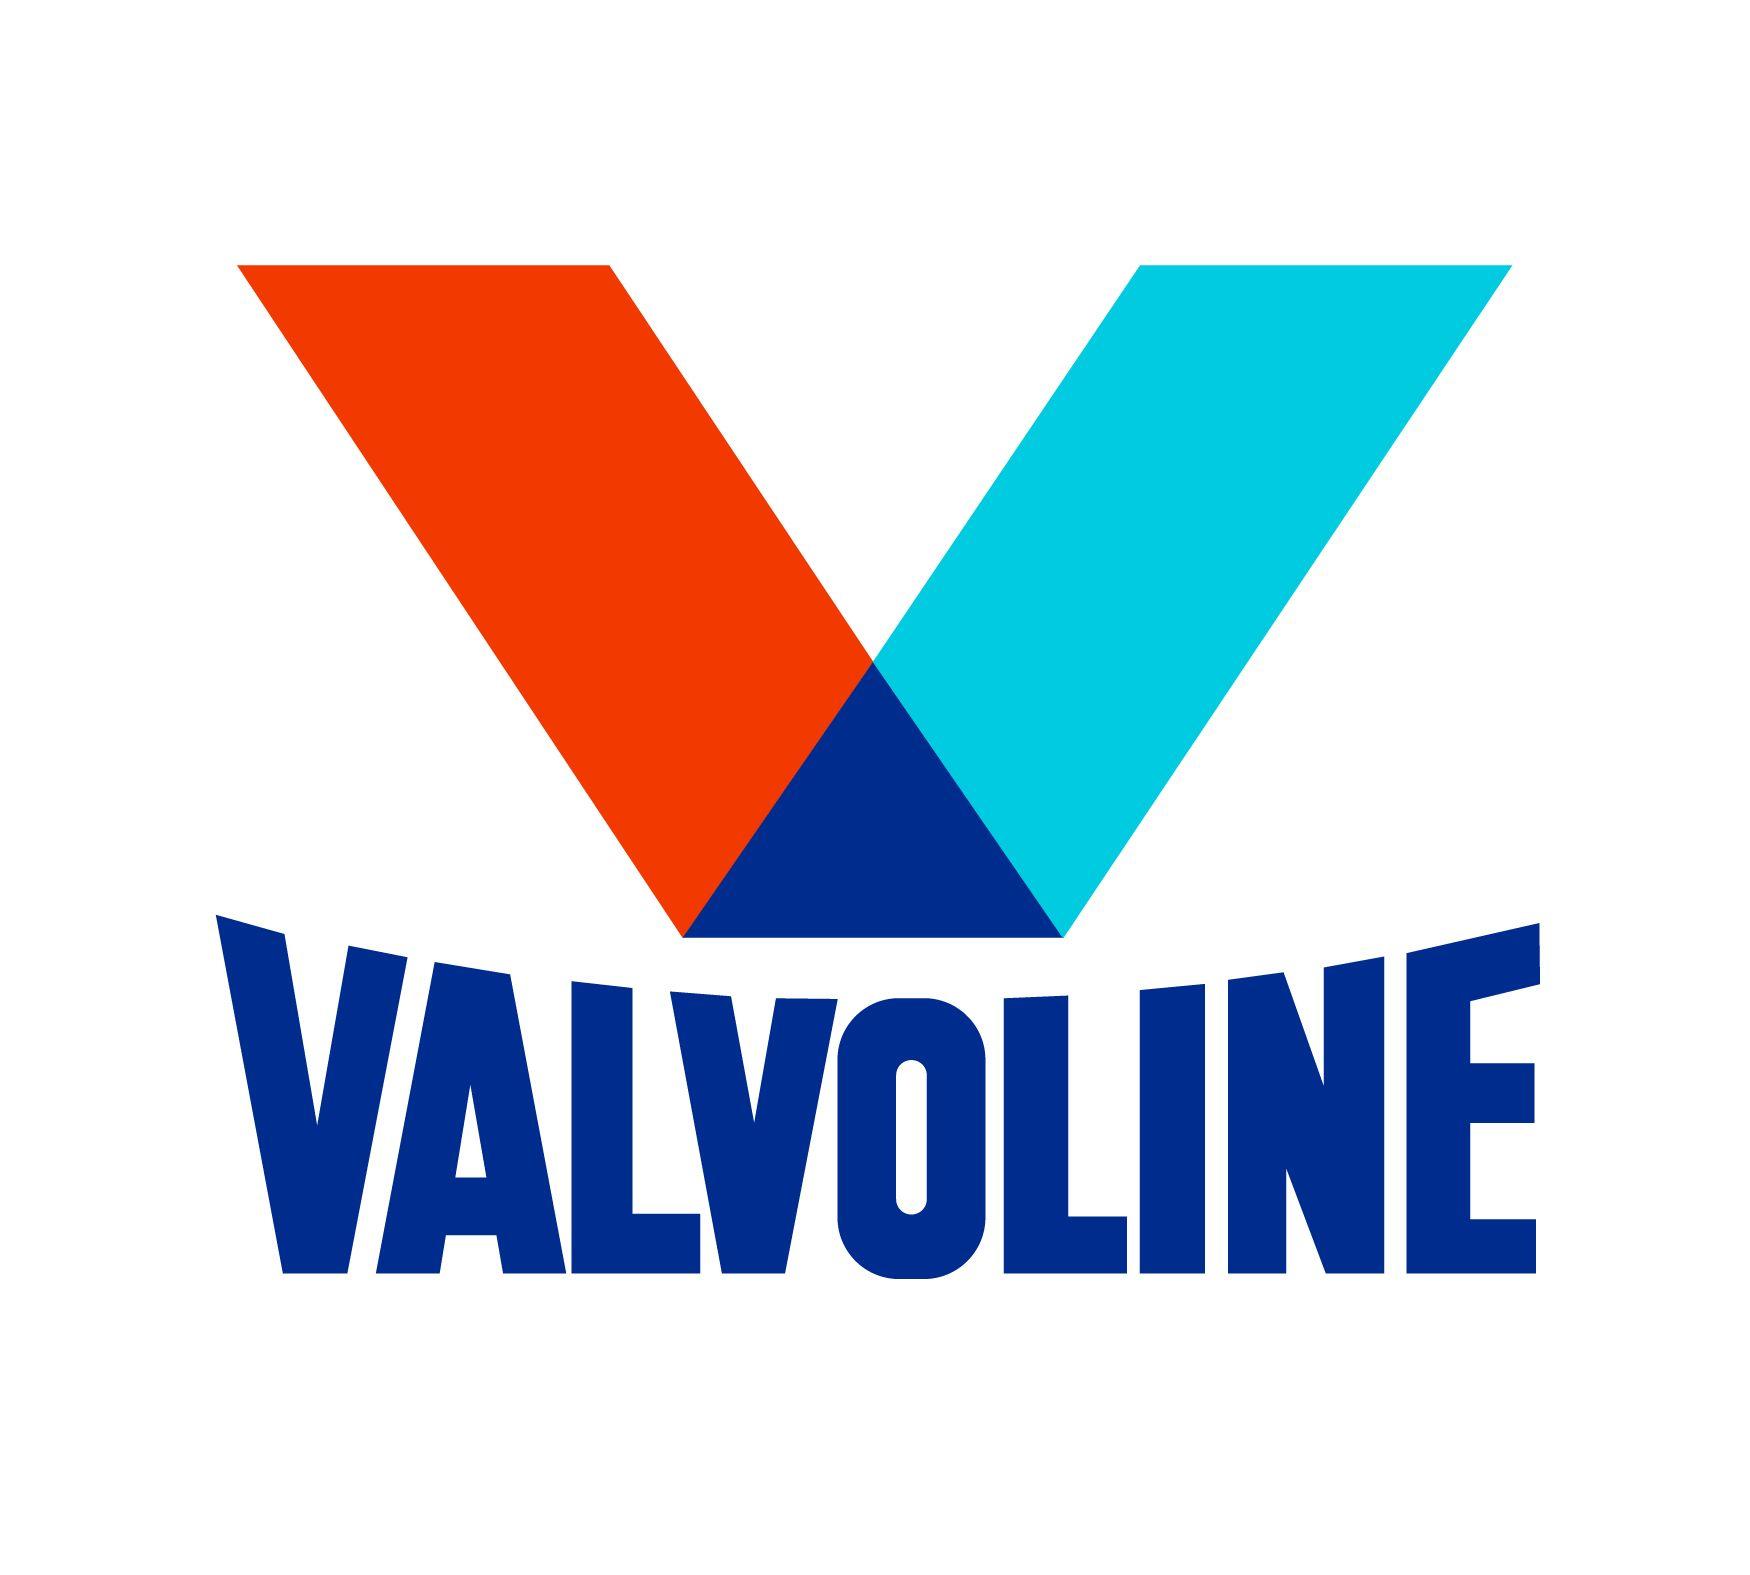 Valvoline Logo - Image - Valvoline not original logo.jpg | Logopedia | FANDOM powered ...